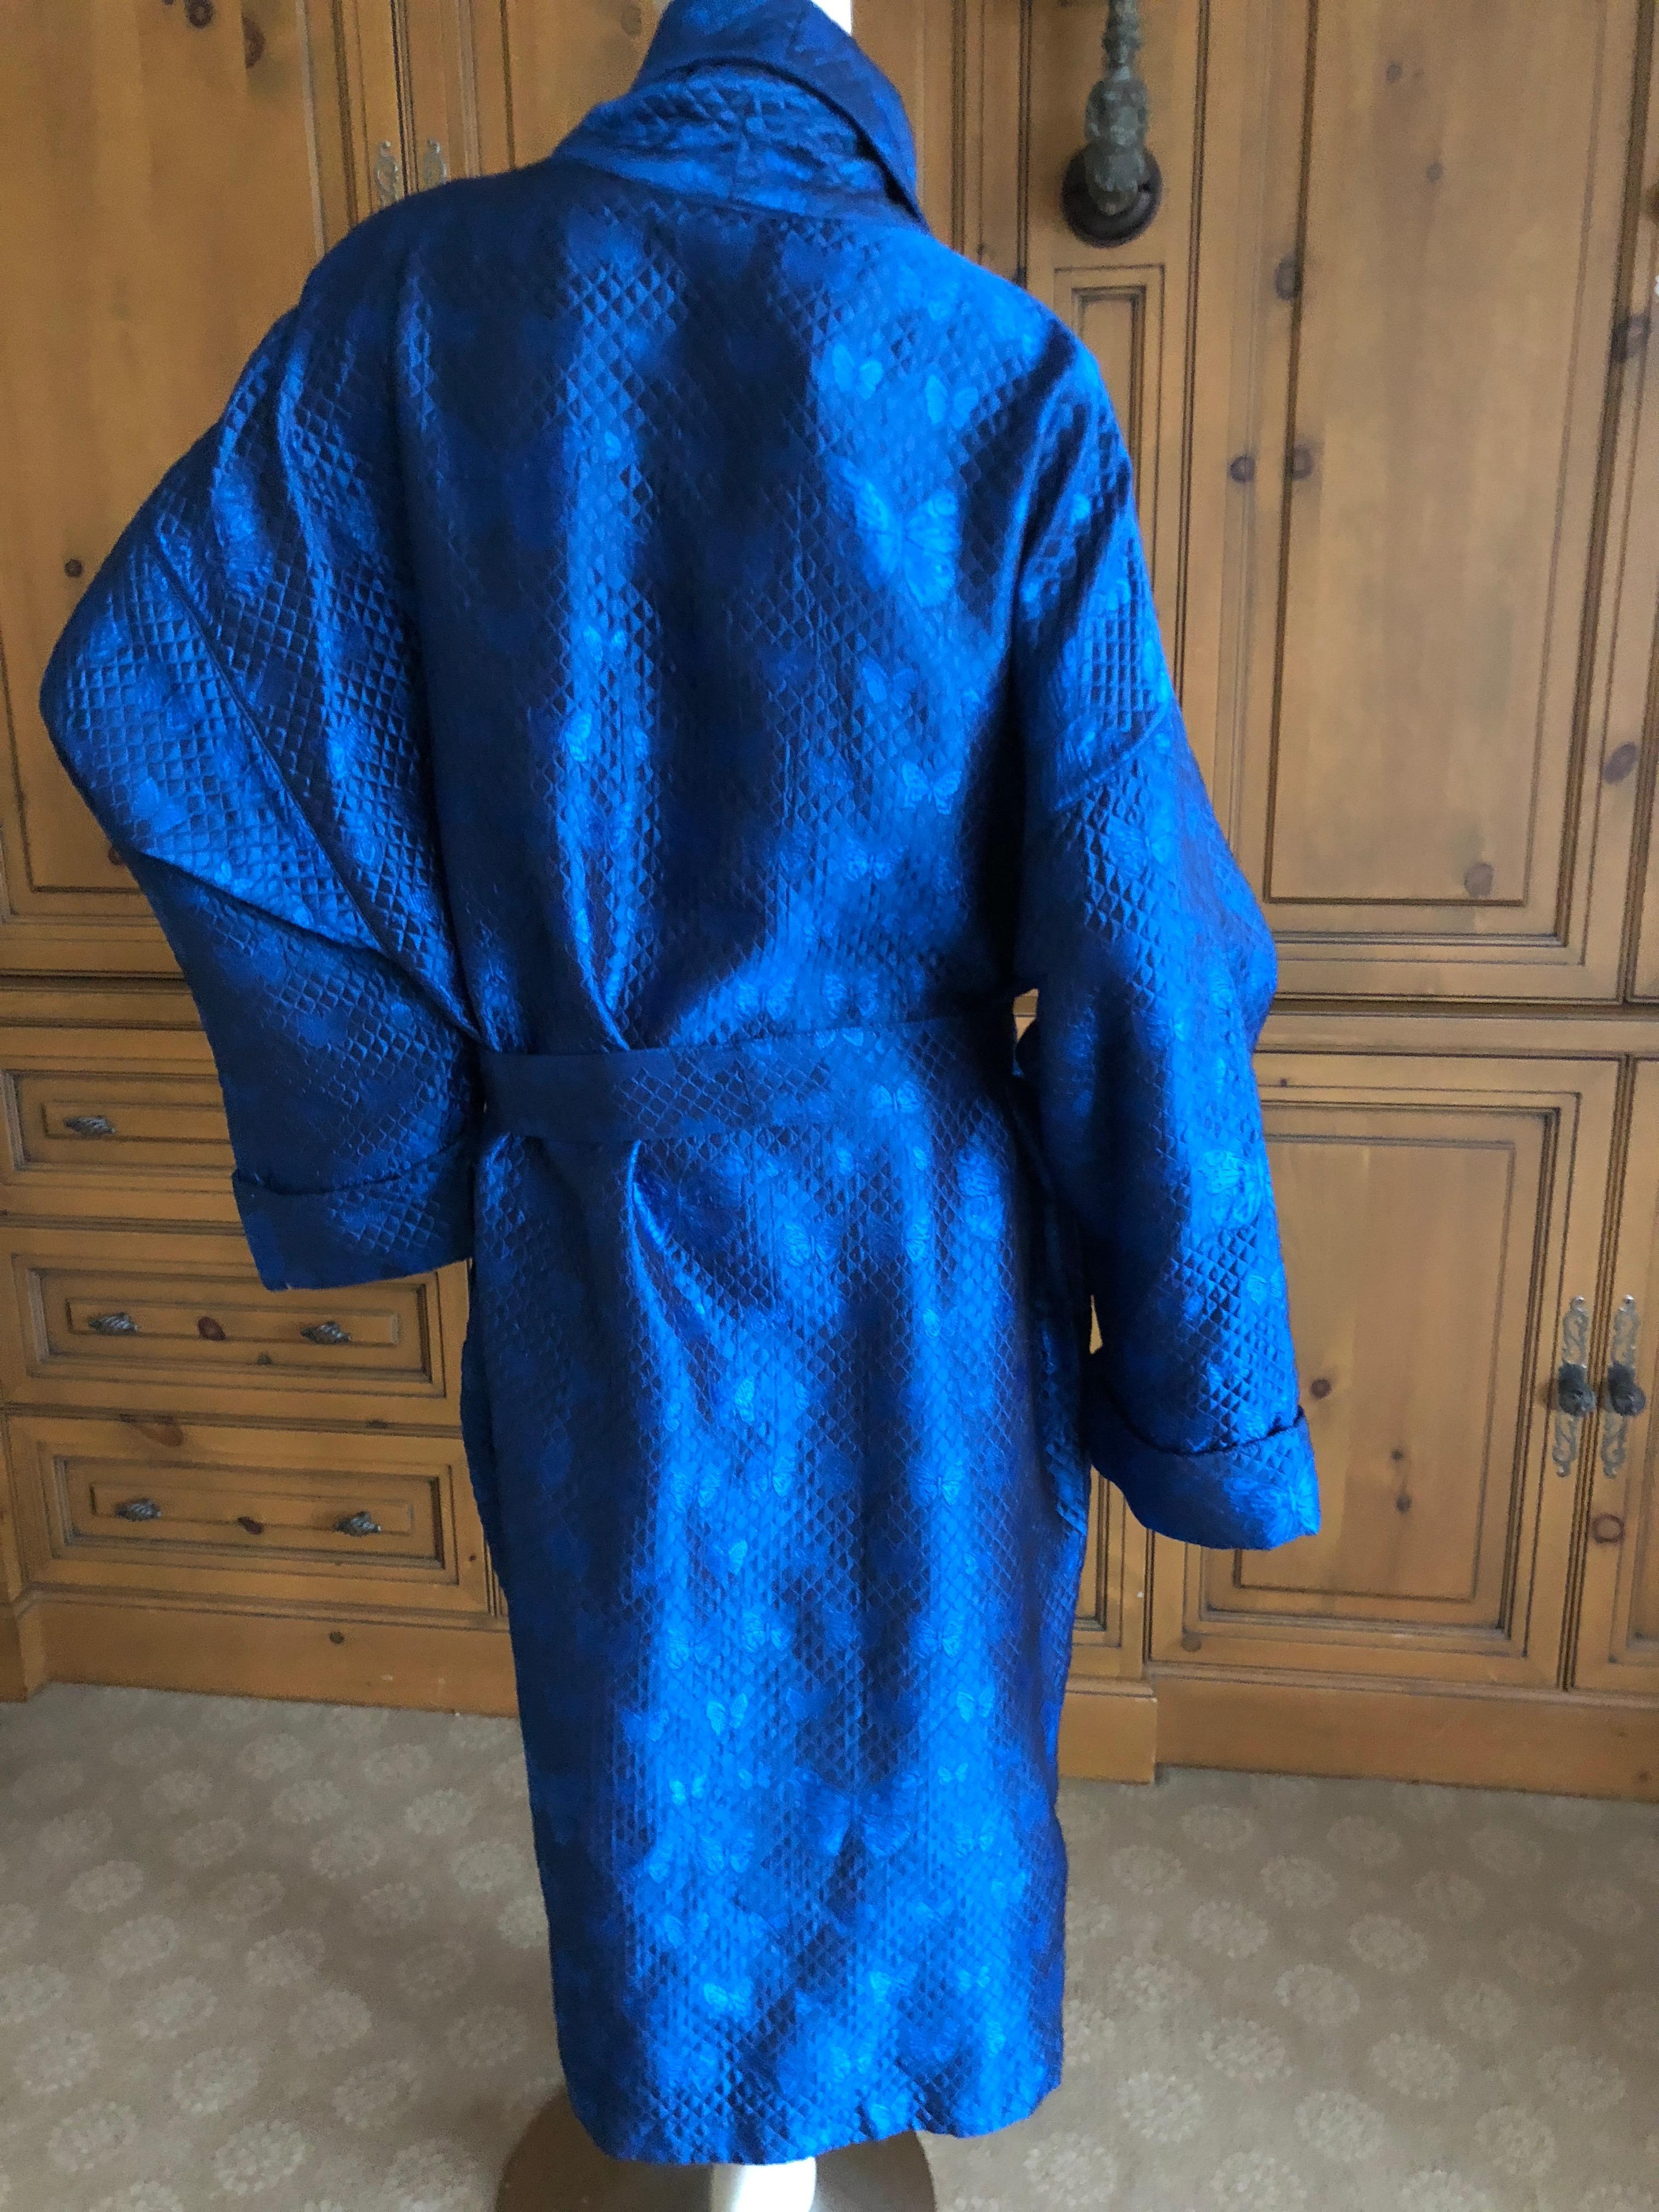 butterfly robe versace